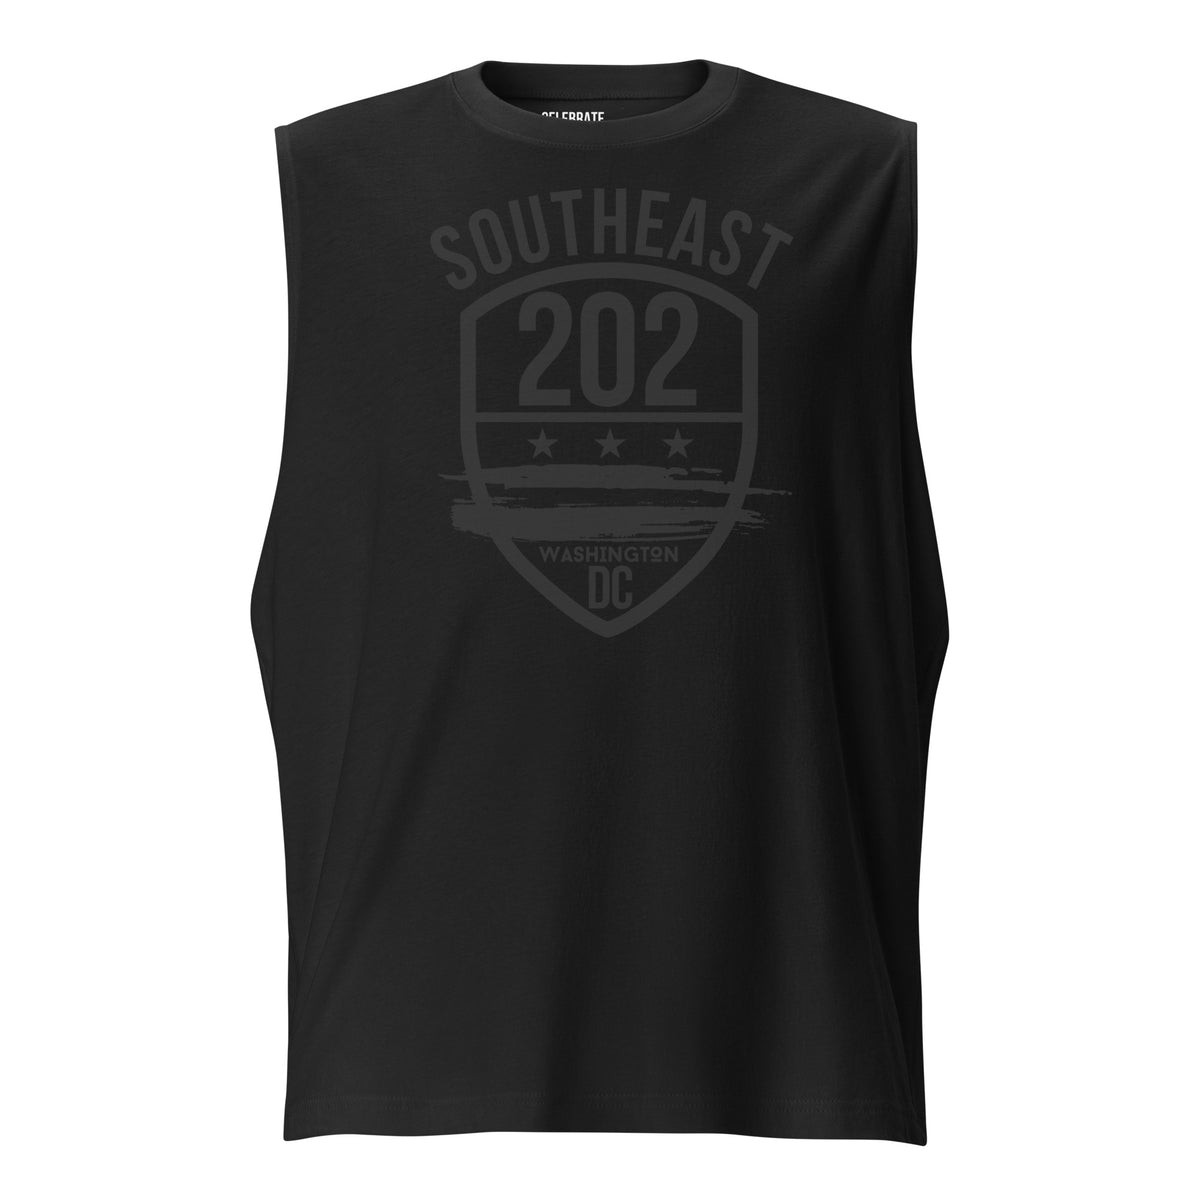 'Southeast/202' - All Black, Sleeveless T-Shirt (Unisex)